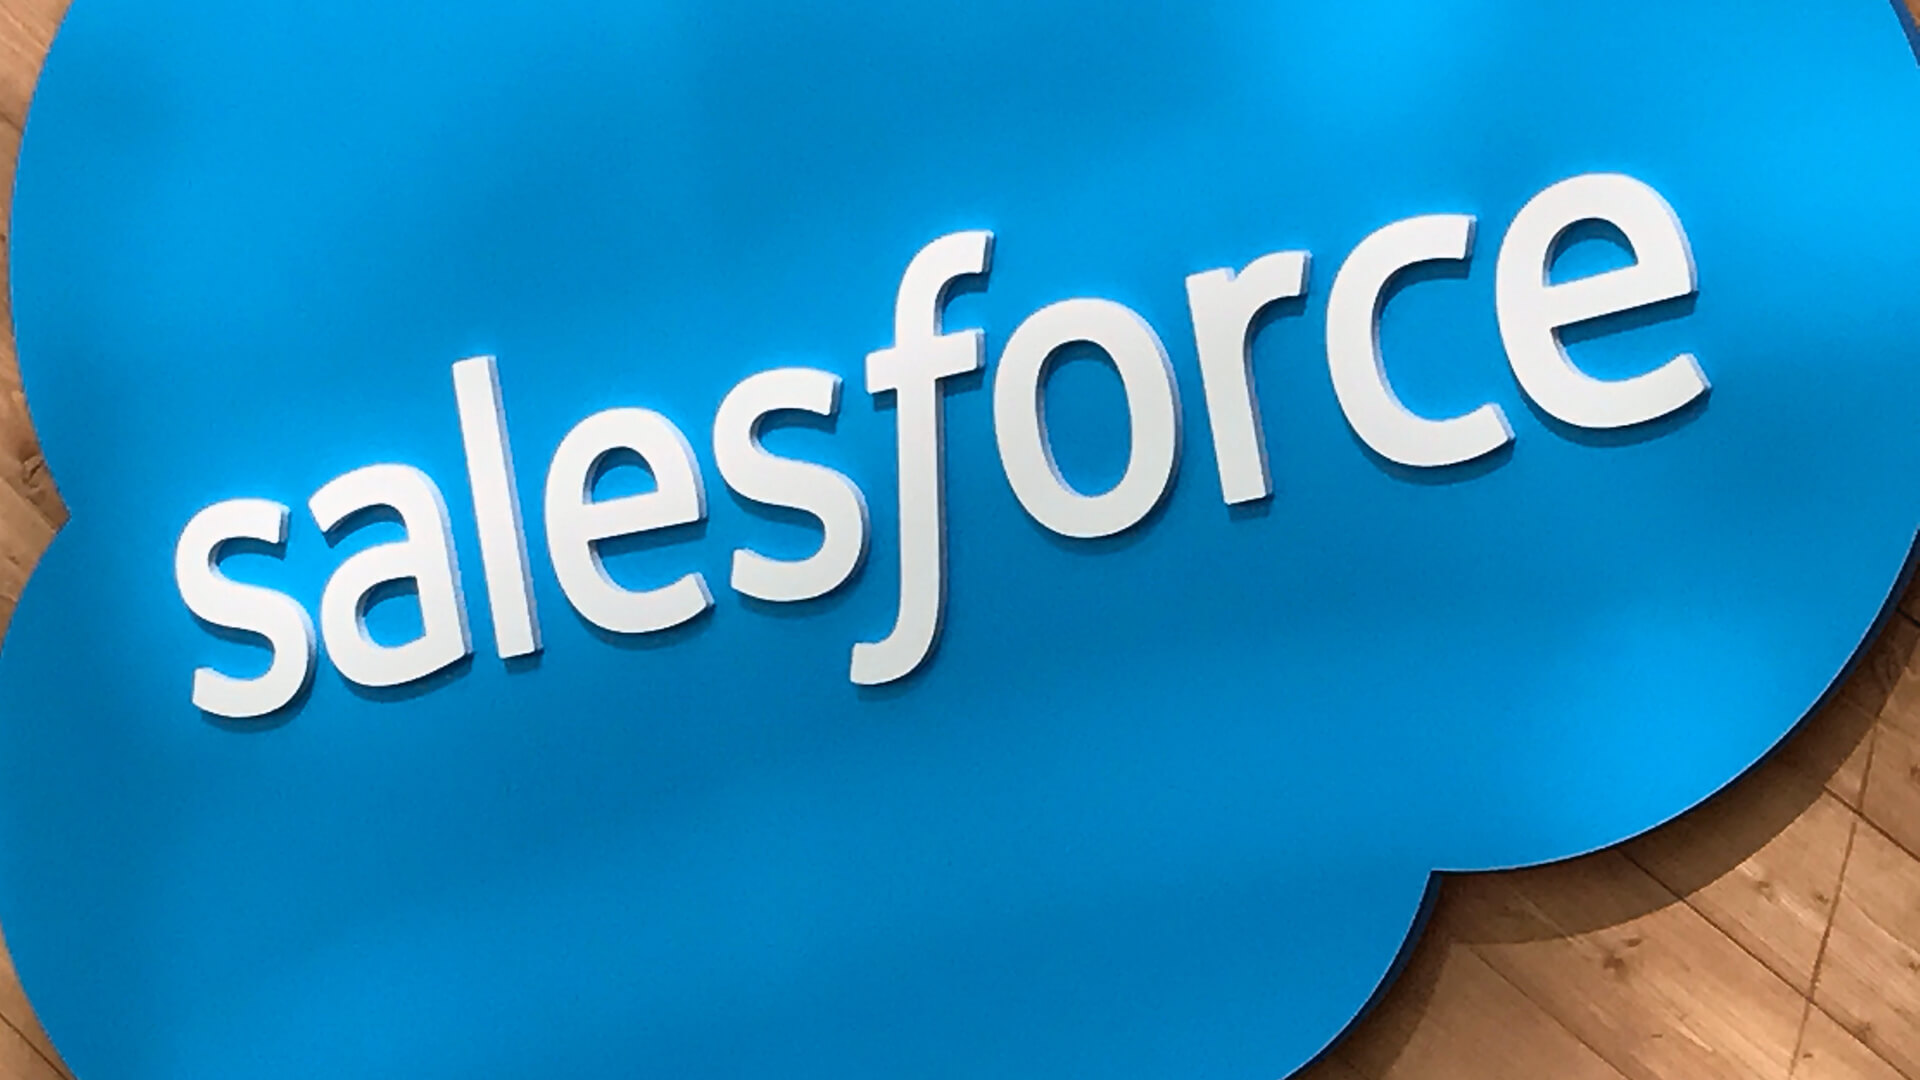 salesforce-logo-sign1-1920